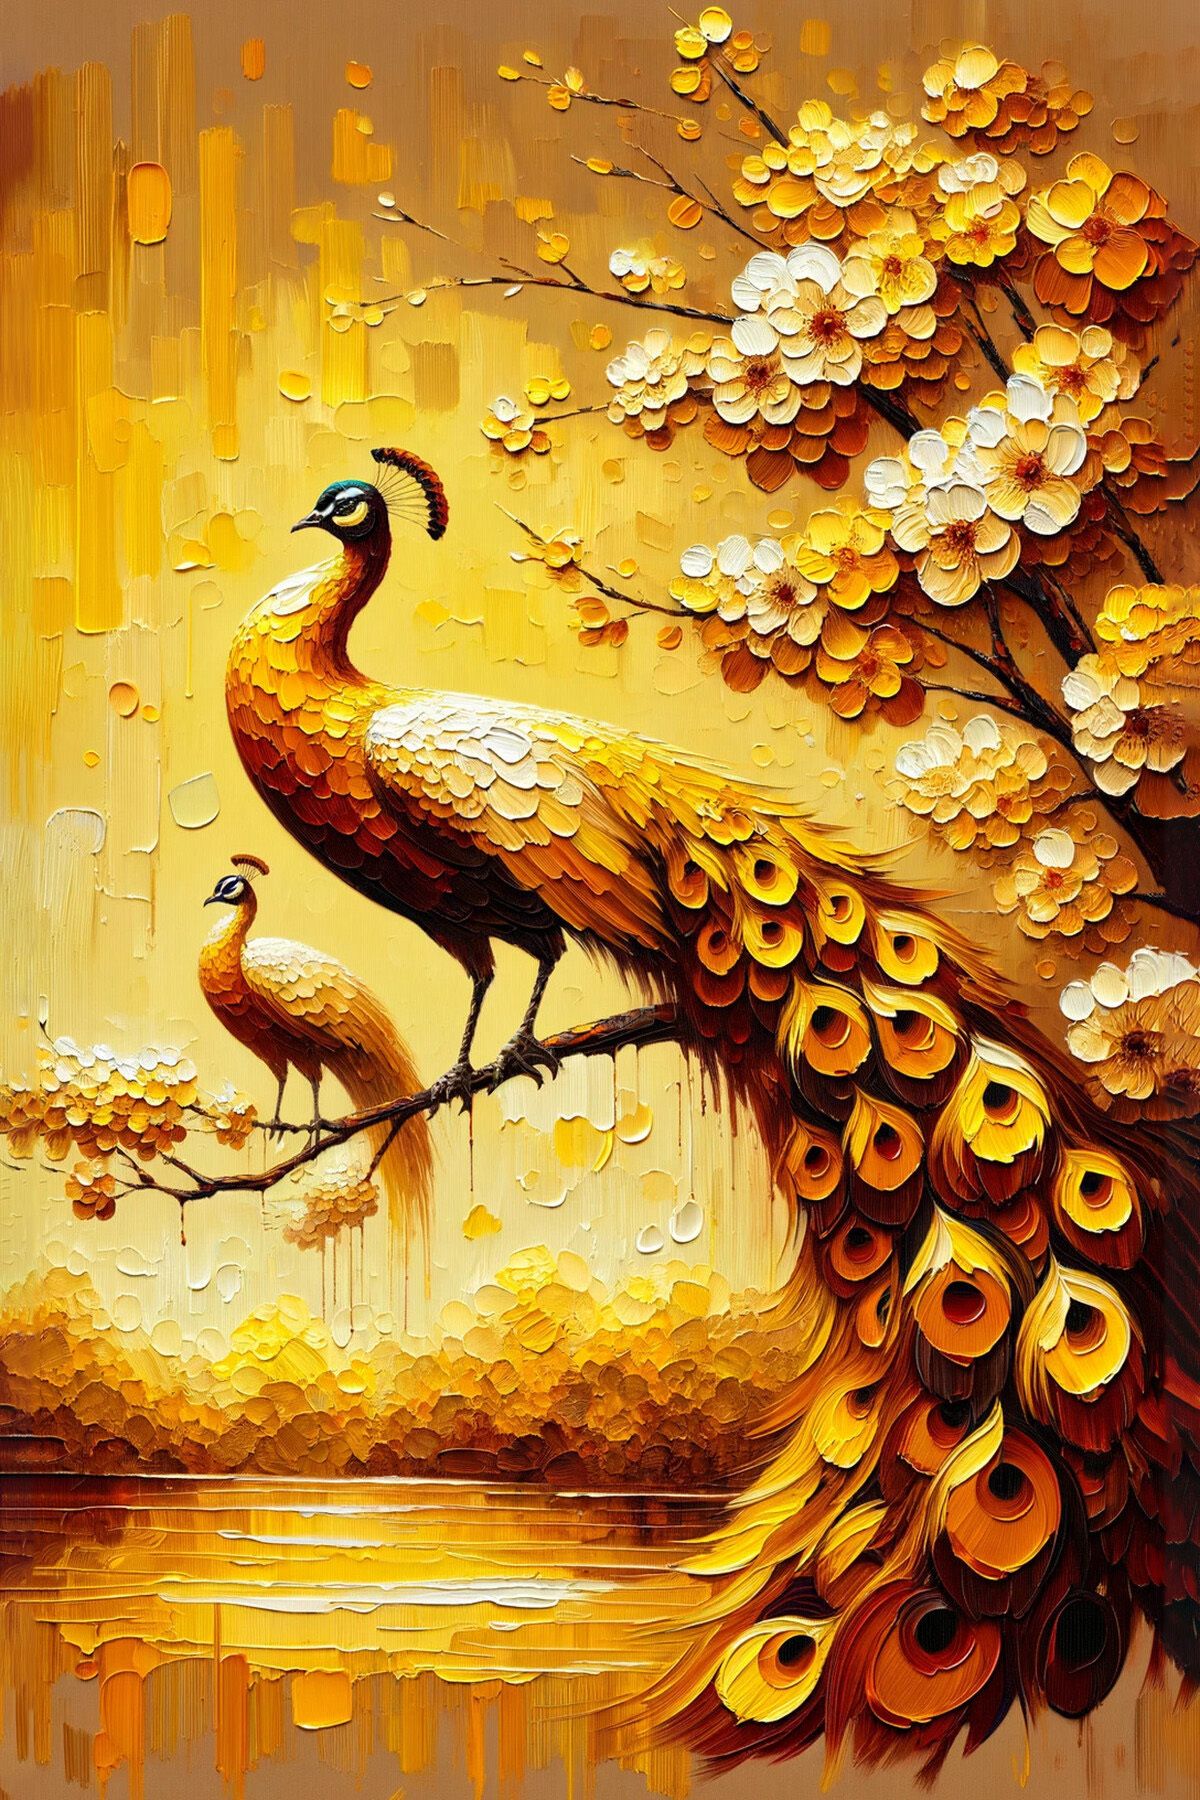 Aden tavus kuşu sarı kanvas tablo